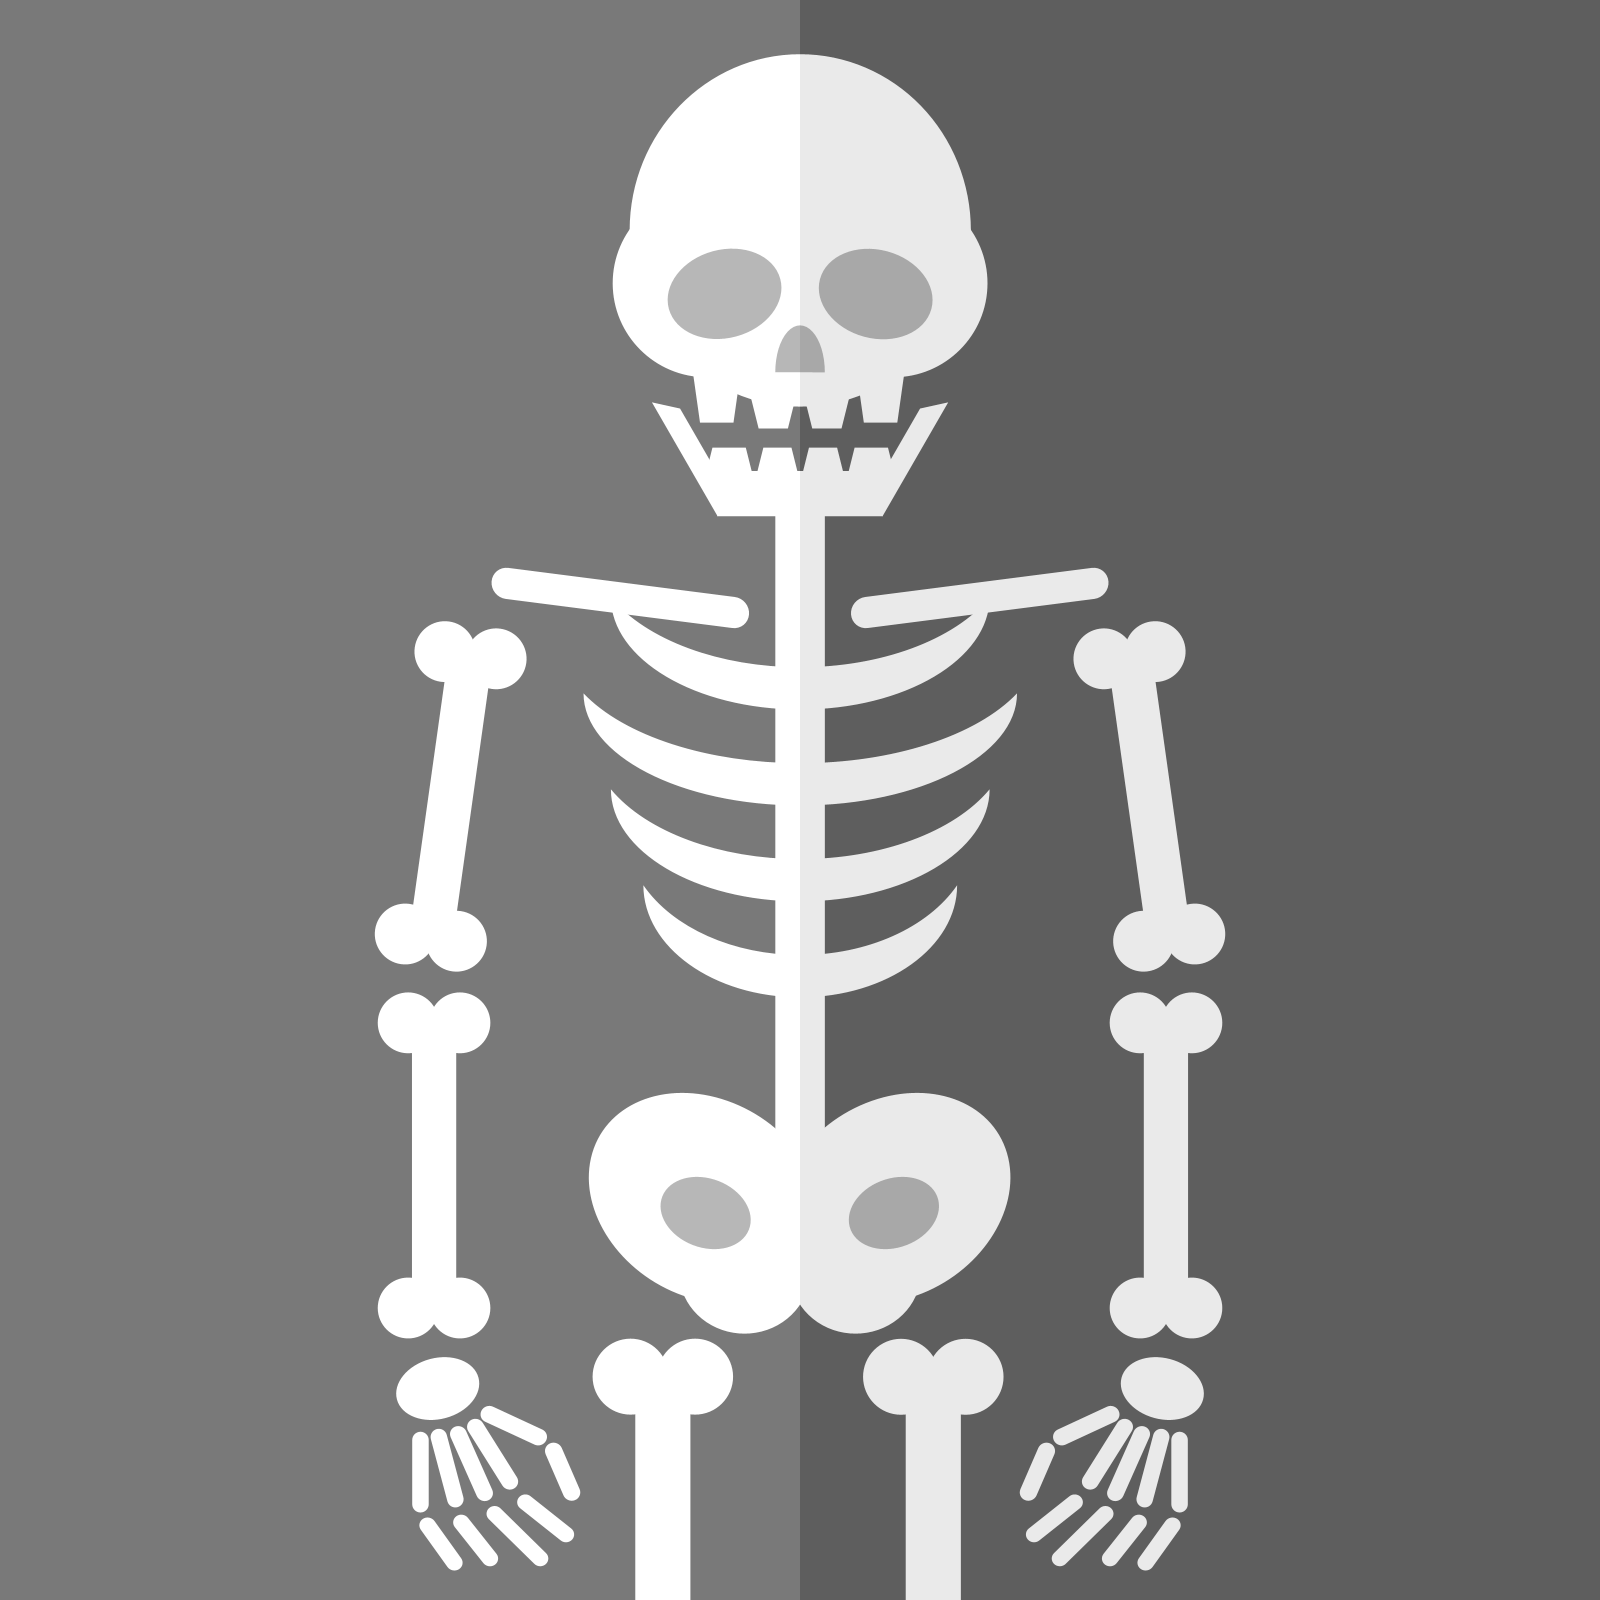 Drawing of a human skeleton